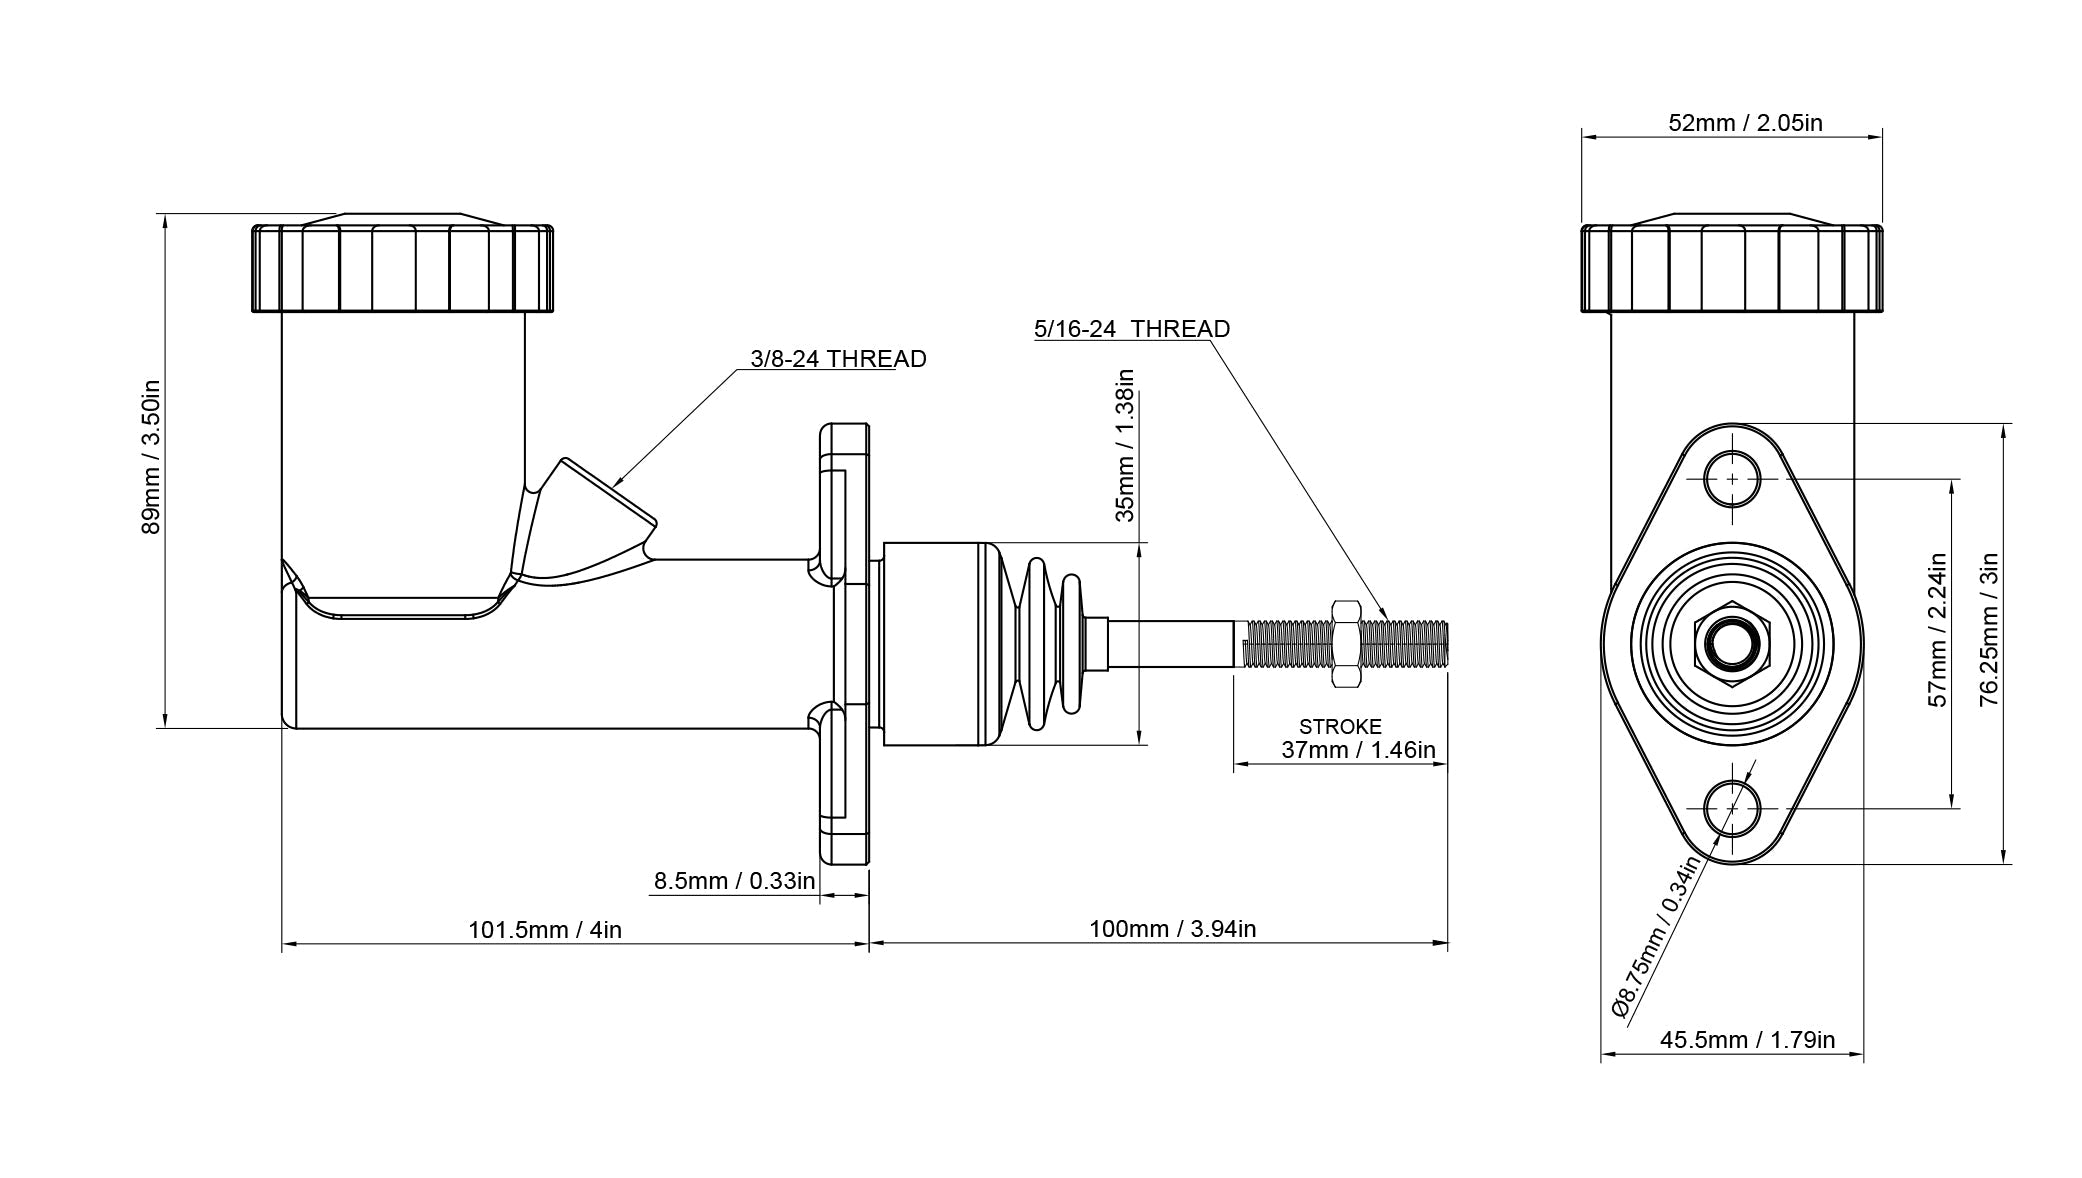 Stand-alone 5/8" internal reservoir master cylinder